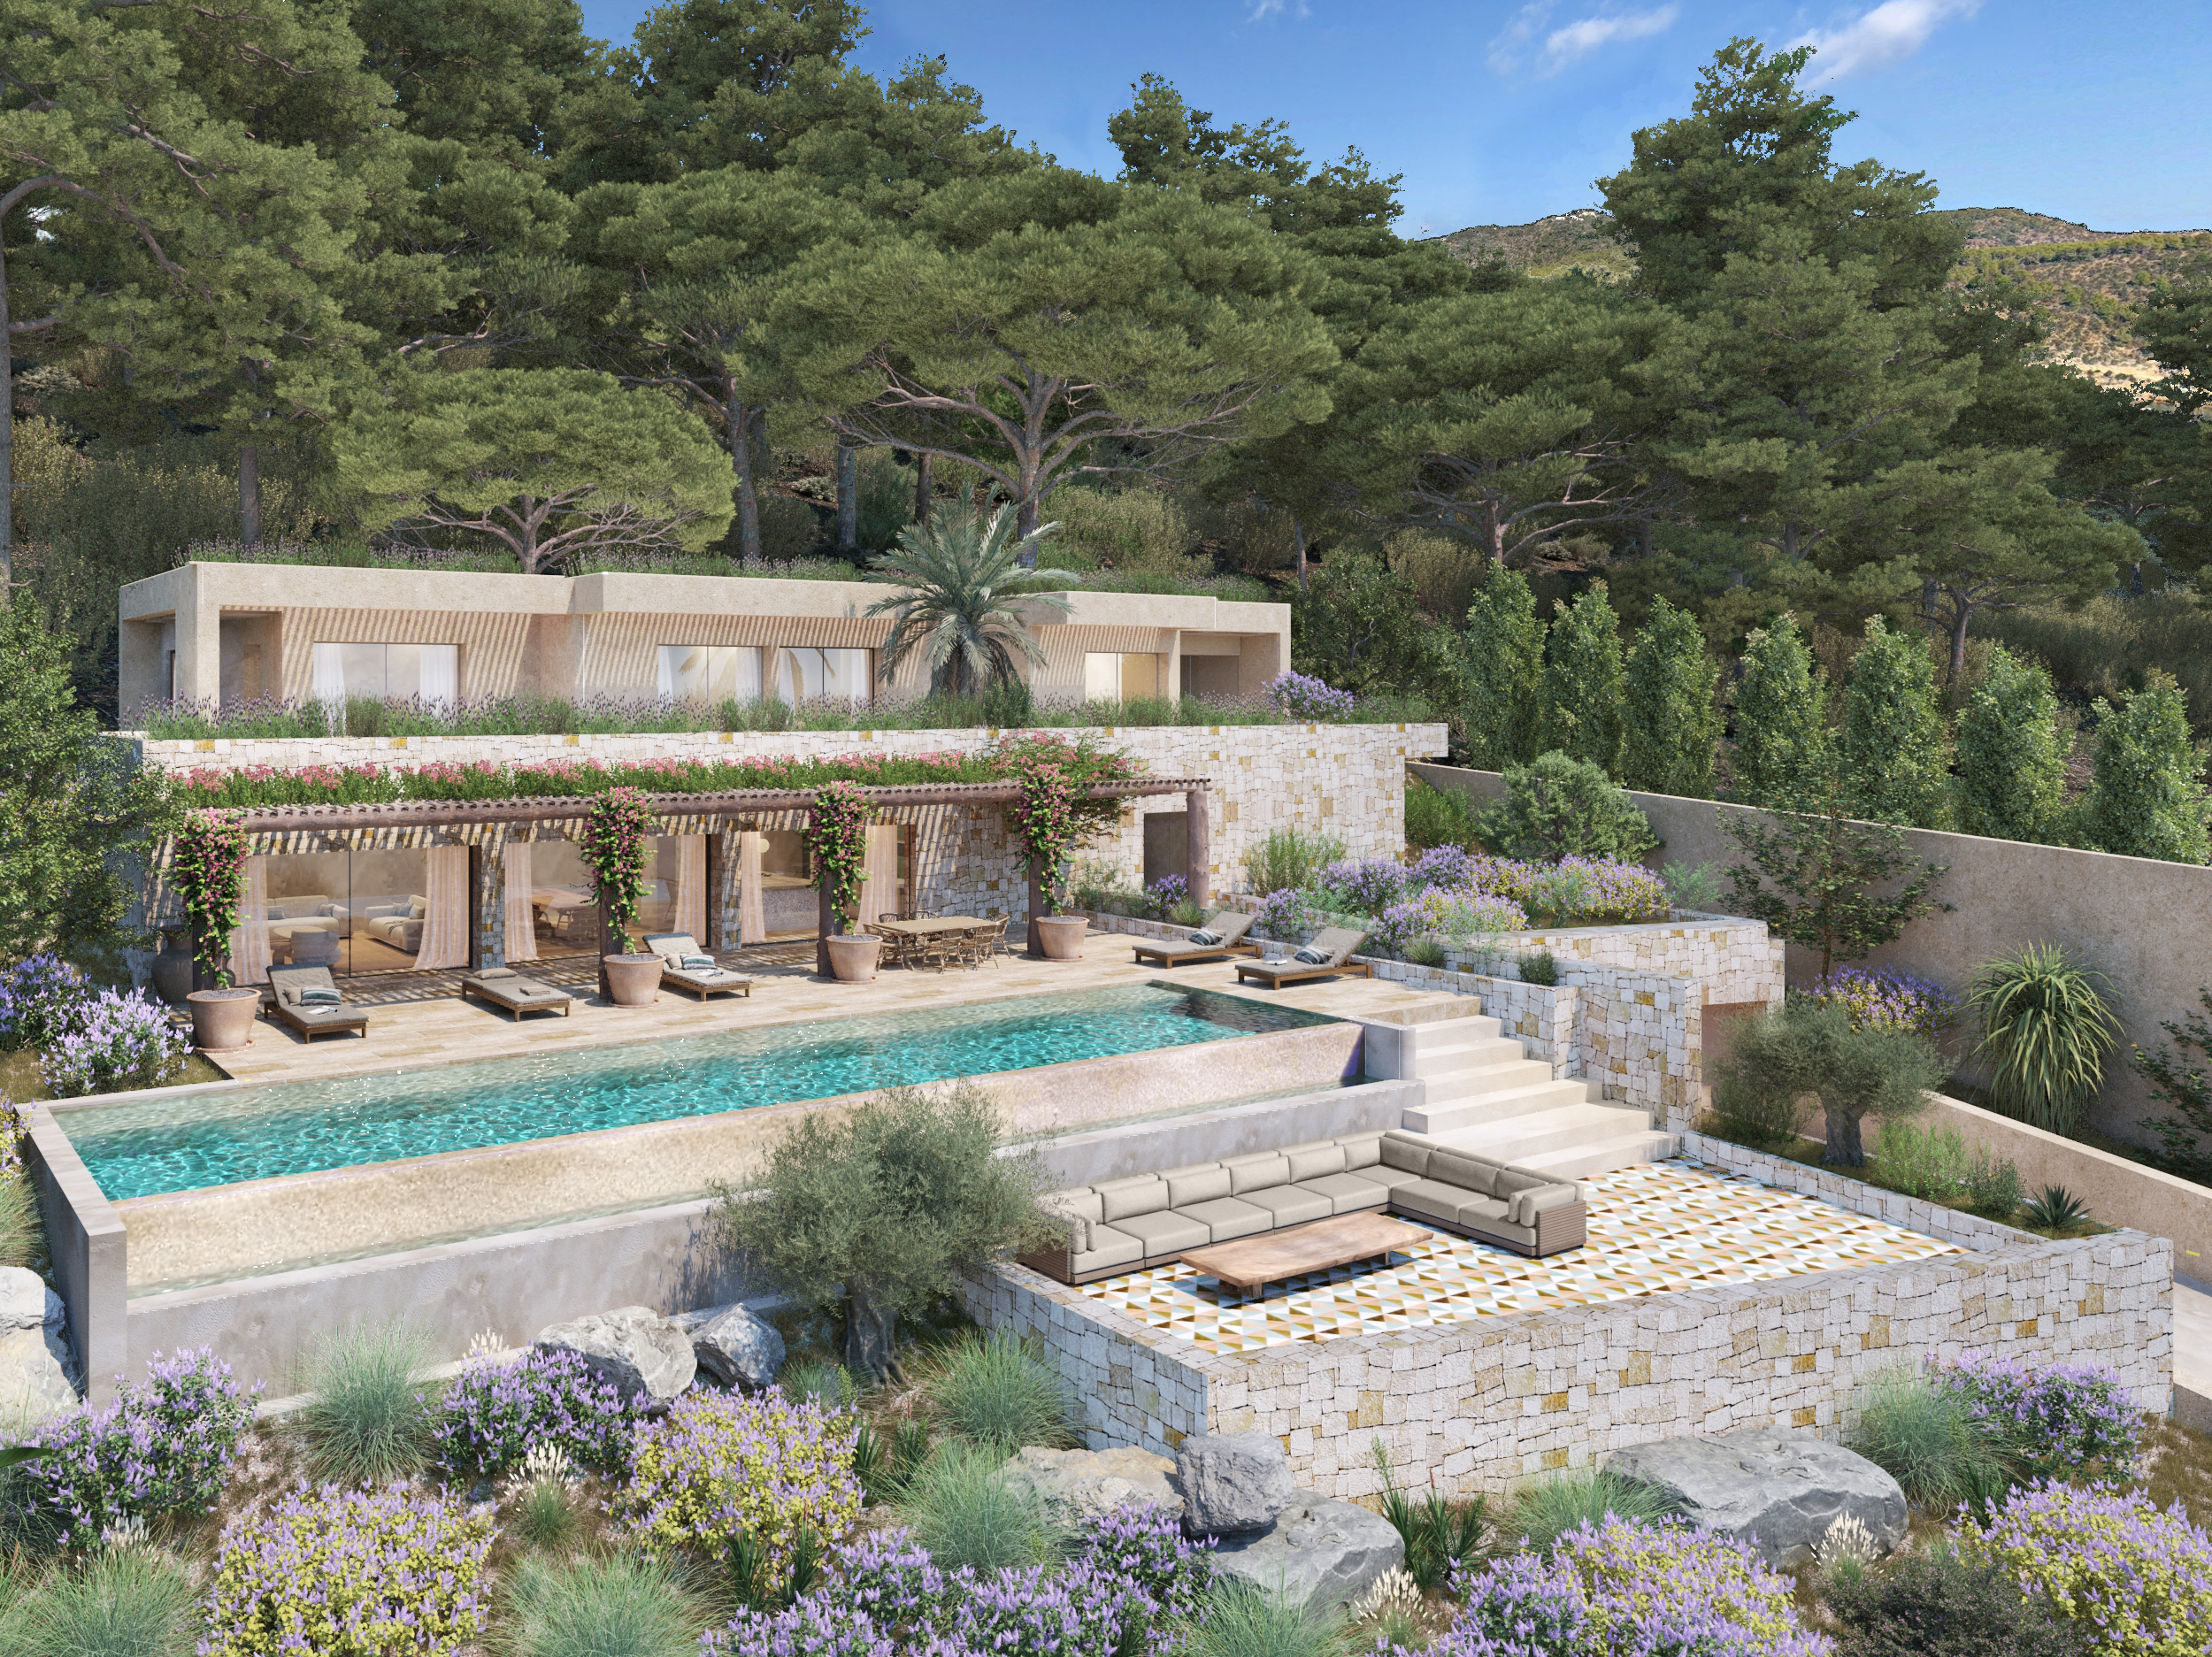 Projekt einer Villa in San Miguel mit Meerblick